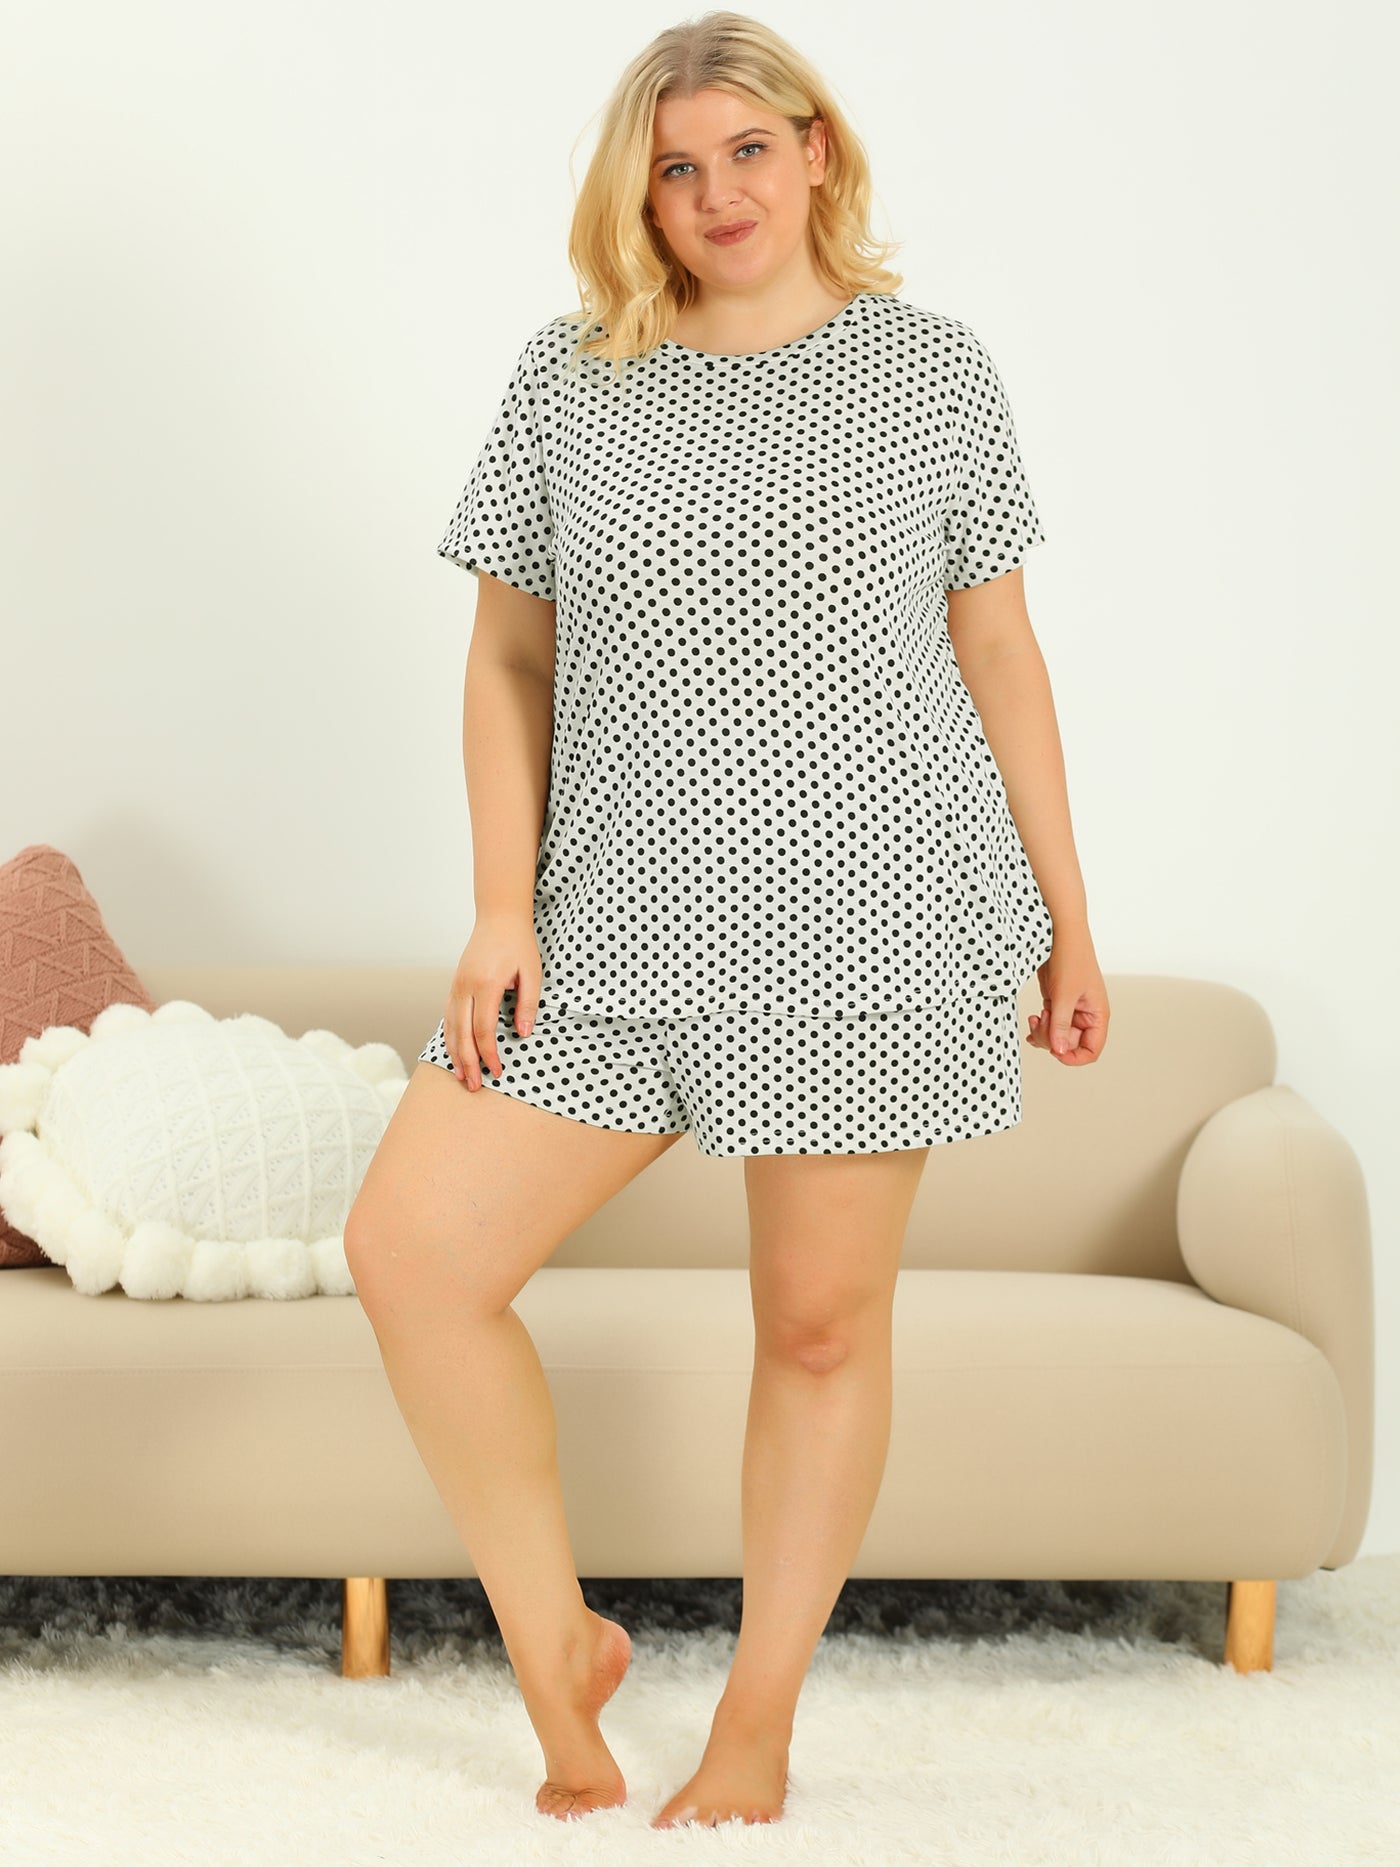 Bublédon Comfy Plus Size Short Sleeve Polka Dot Pajamas Set